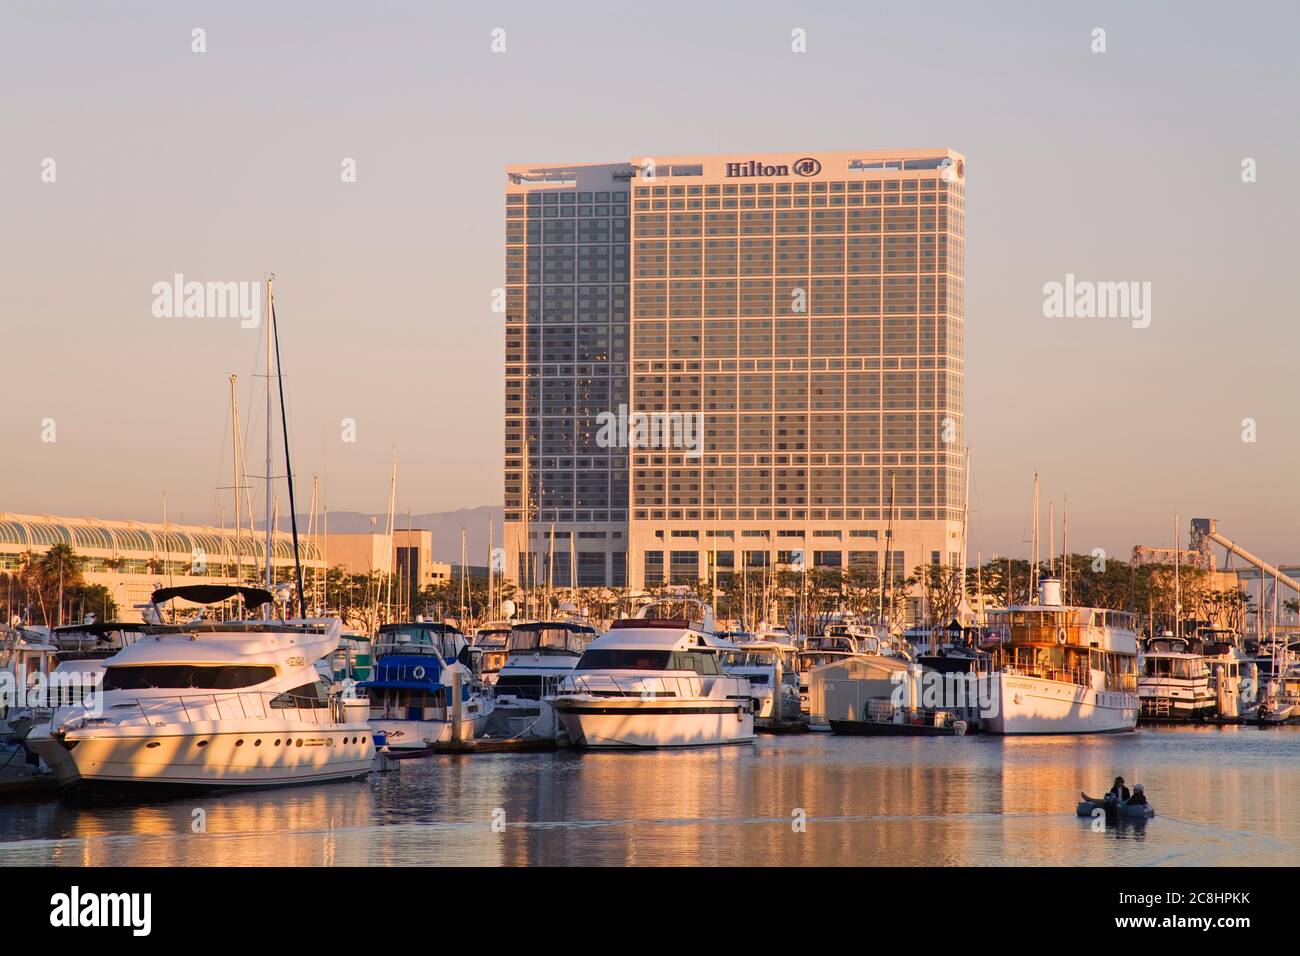 Hilton Hotel Bayfront, San Diego, California, United States Stock Photo